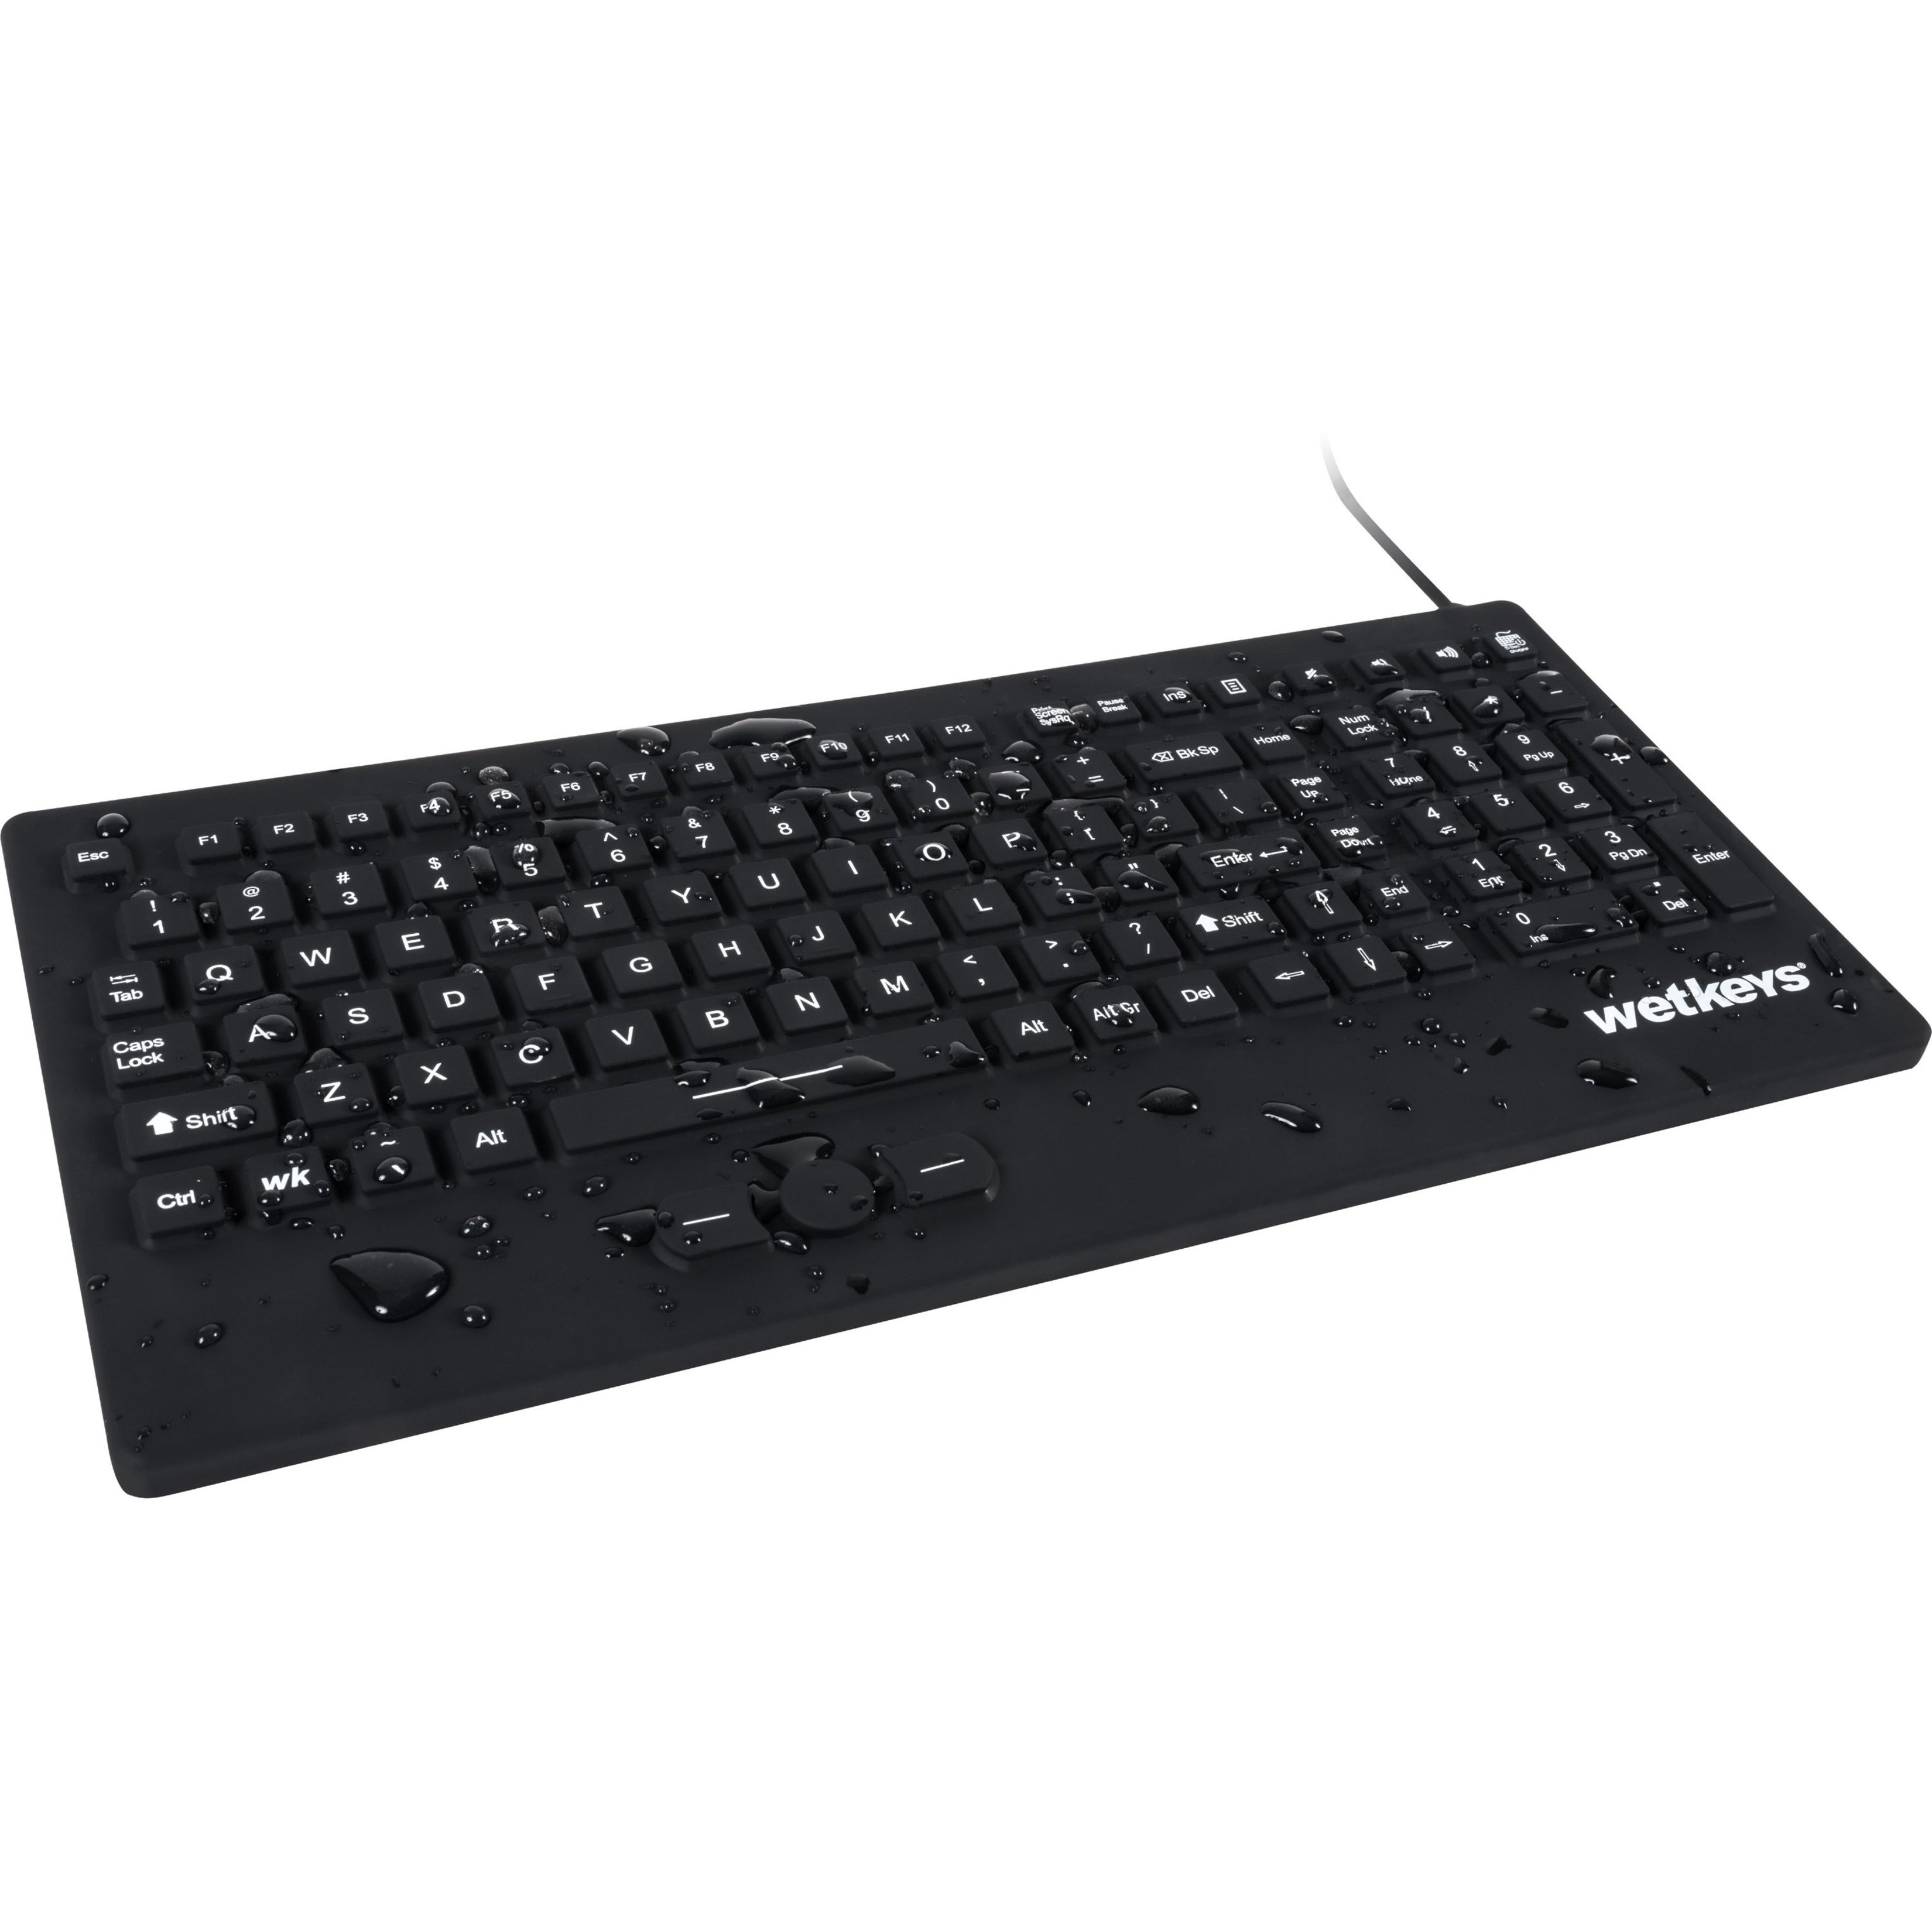 WetKeys Washable Keyboards KBWKRC105SPi-BK Rugged-Point Keyboard, Waterproof Industrial Keyb Trackpointer On/Off USB Black